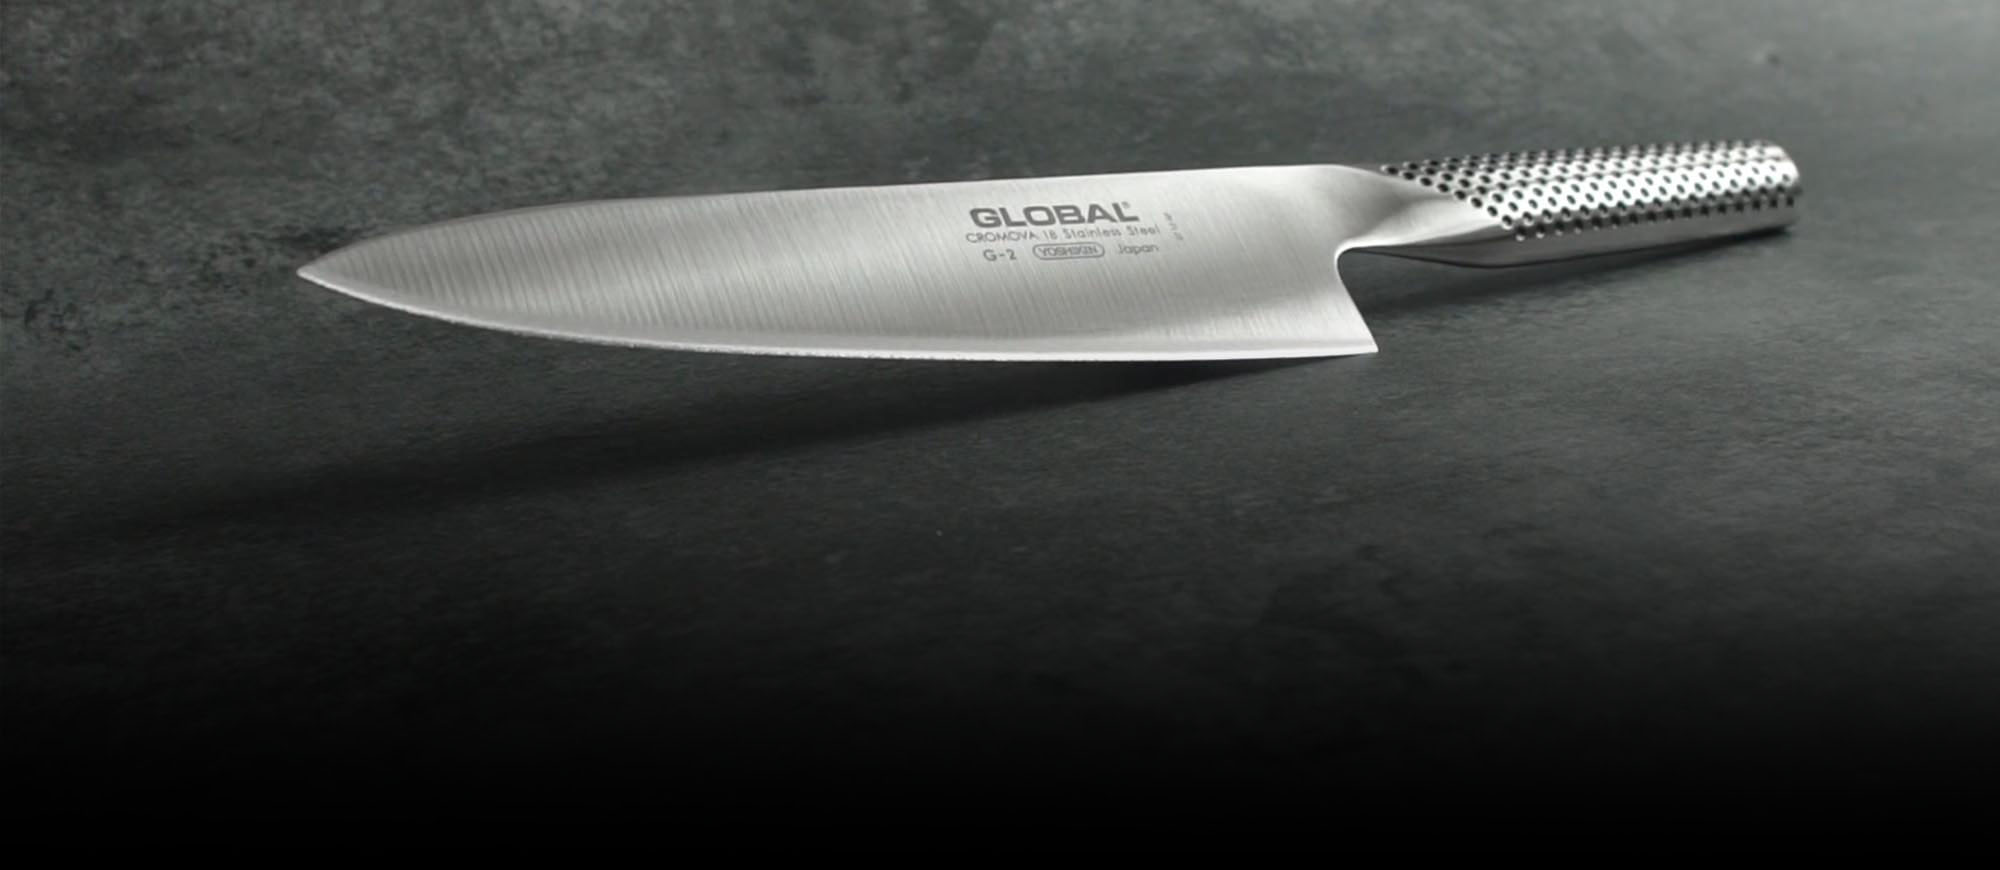 Forhandle ækvator bakke About Global - Global Cutlery USA | Global Cutlery USA